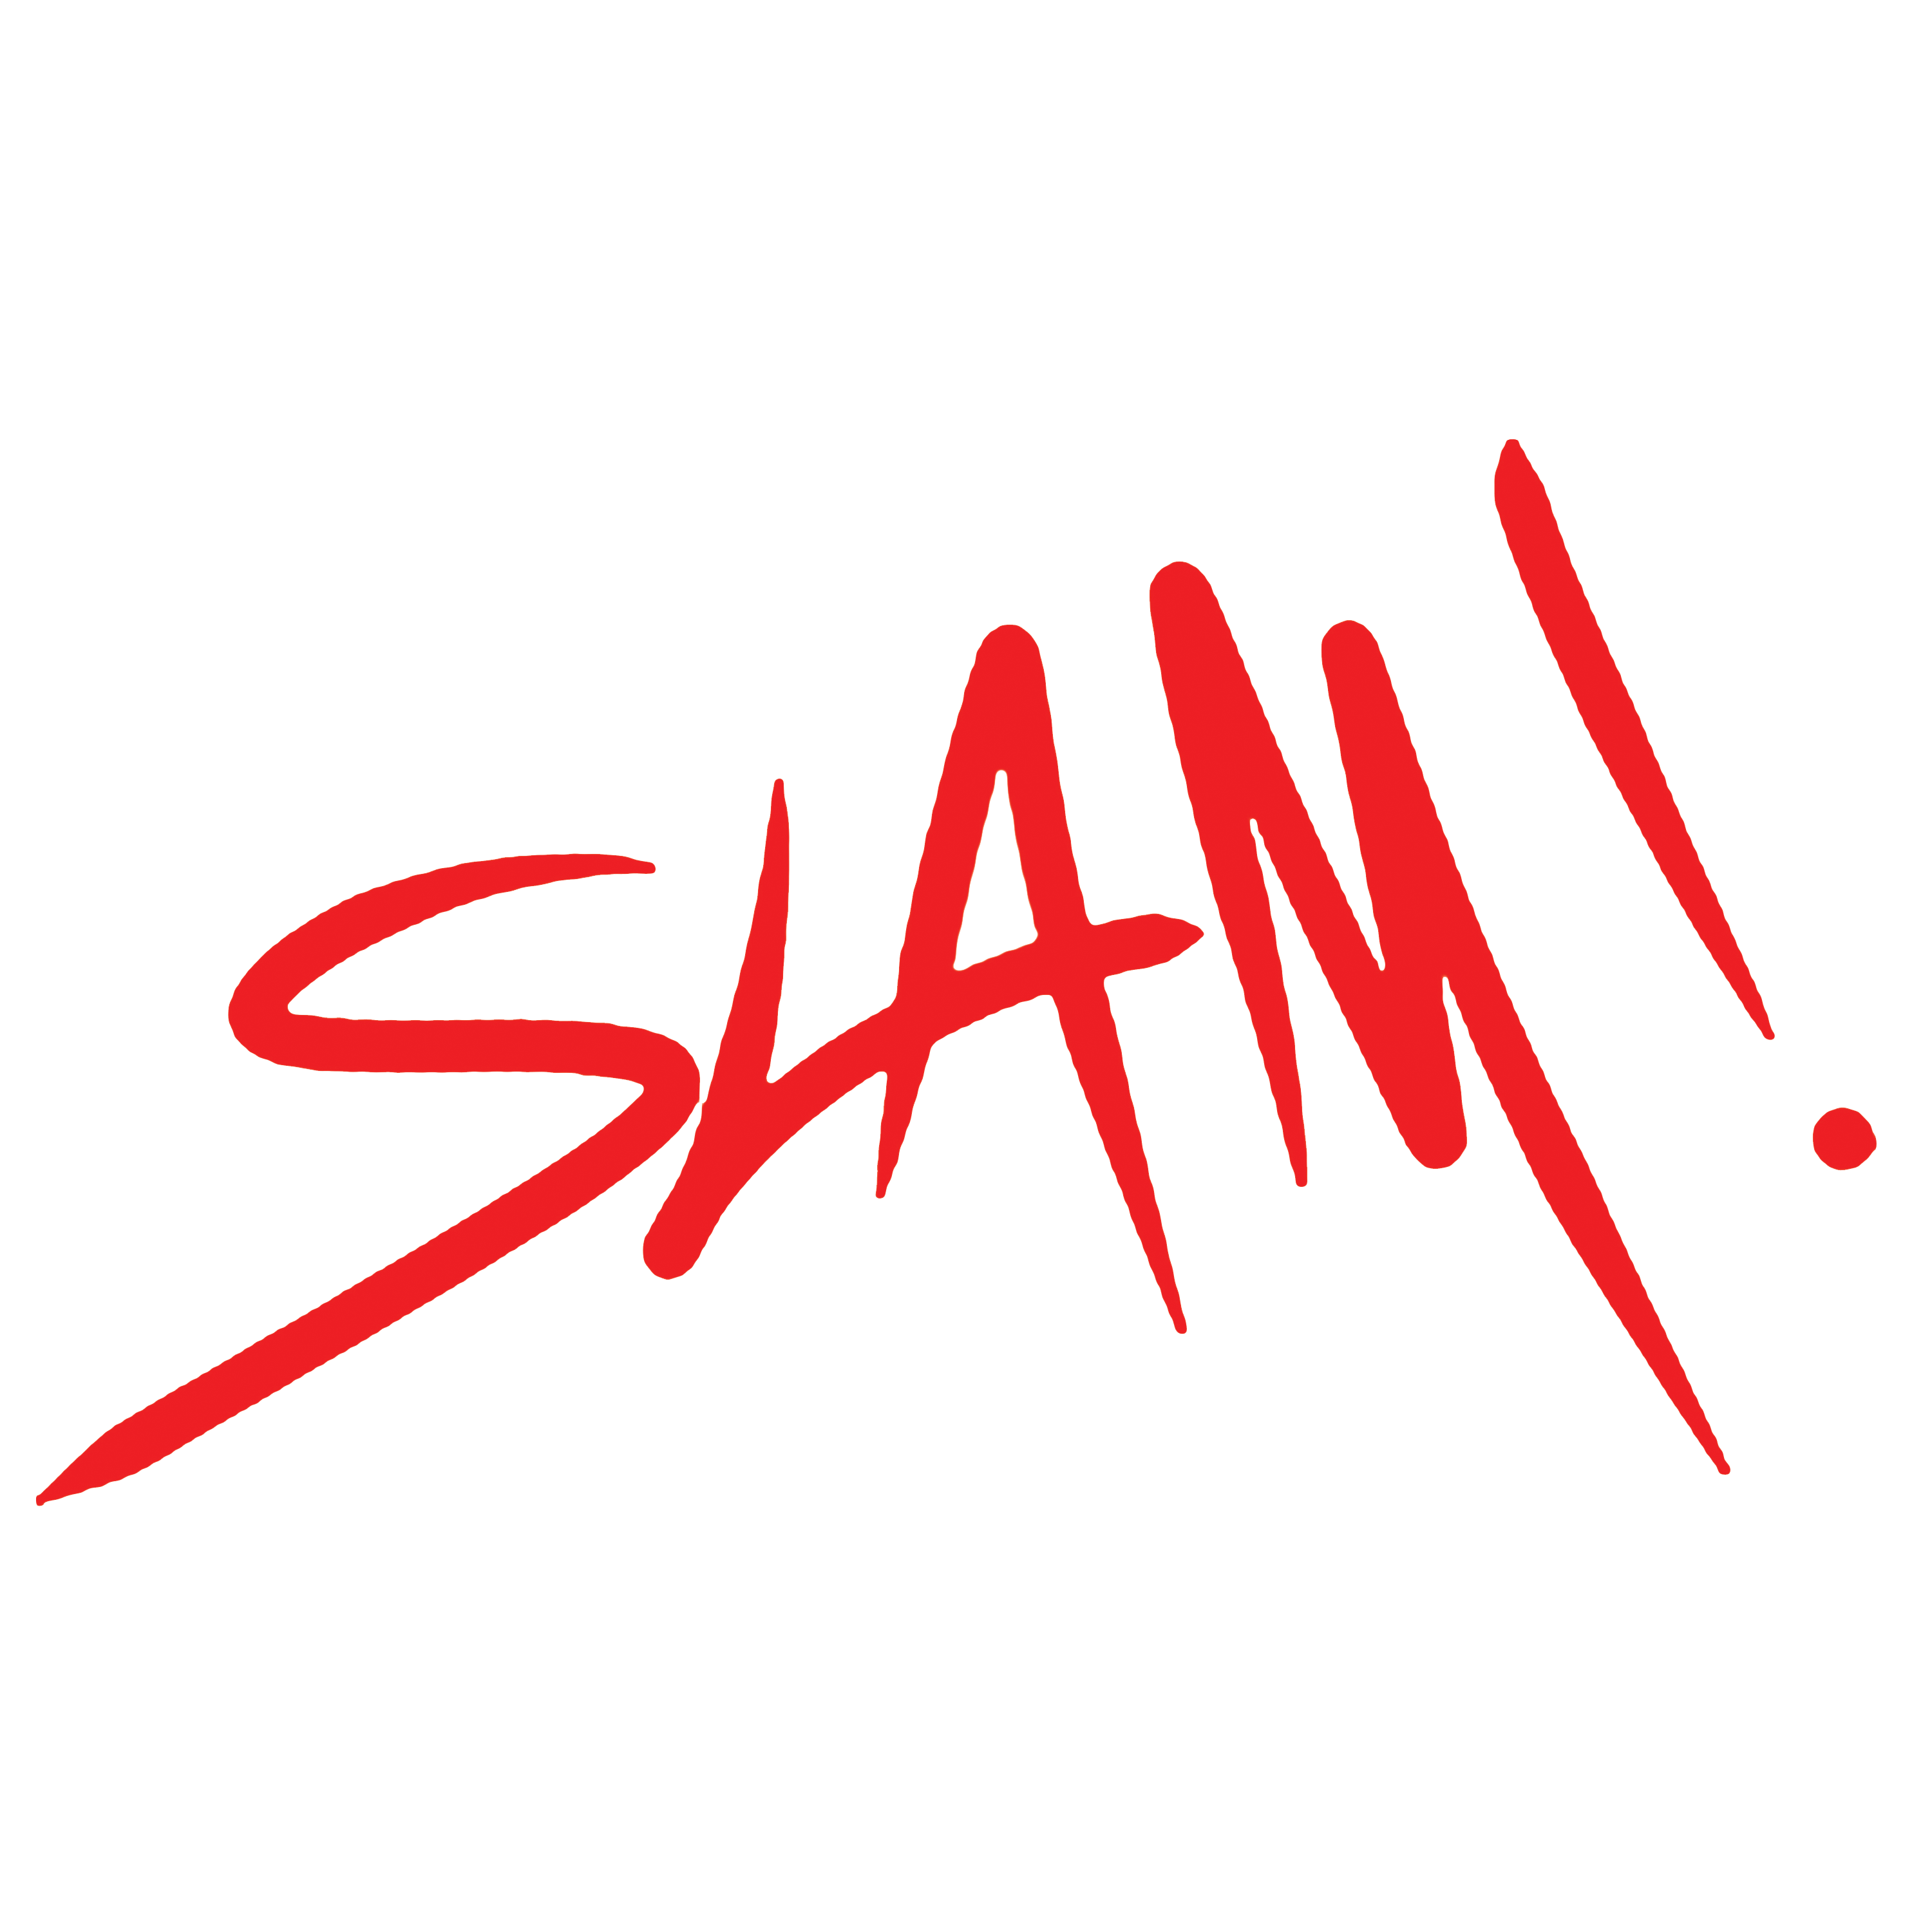 Slam Logo - Slam Png & Free Slam.png Transparent Images #14269 - PNGio